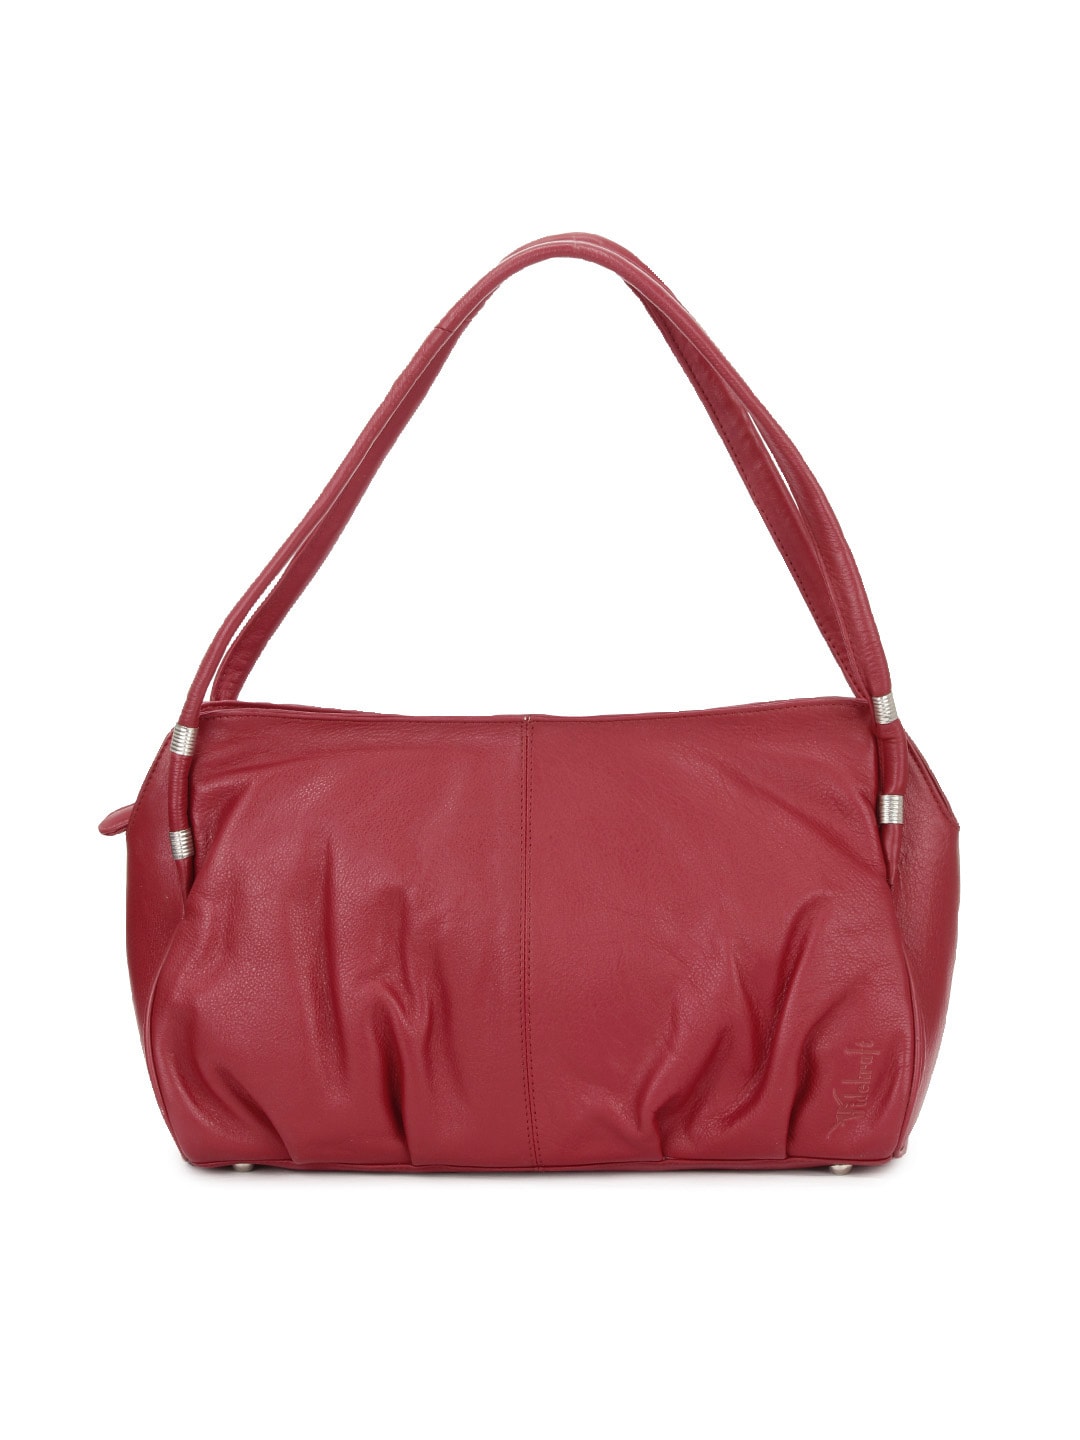 Hidekraft Women Red Handbag